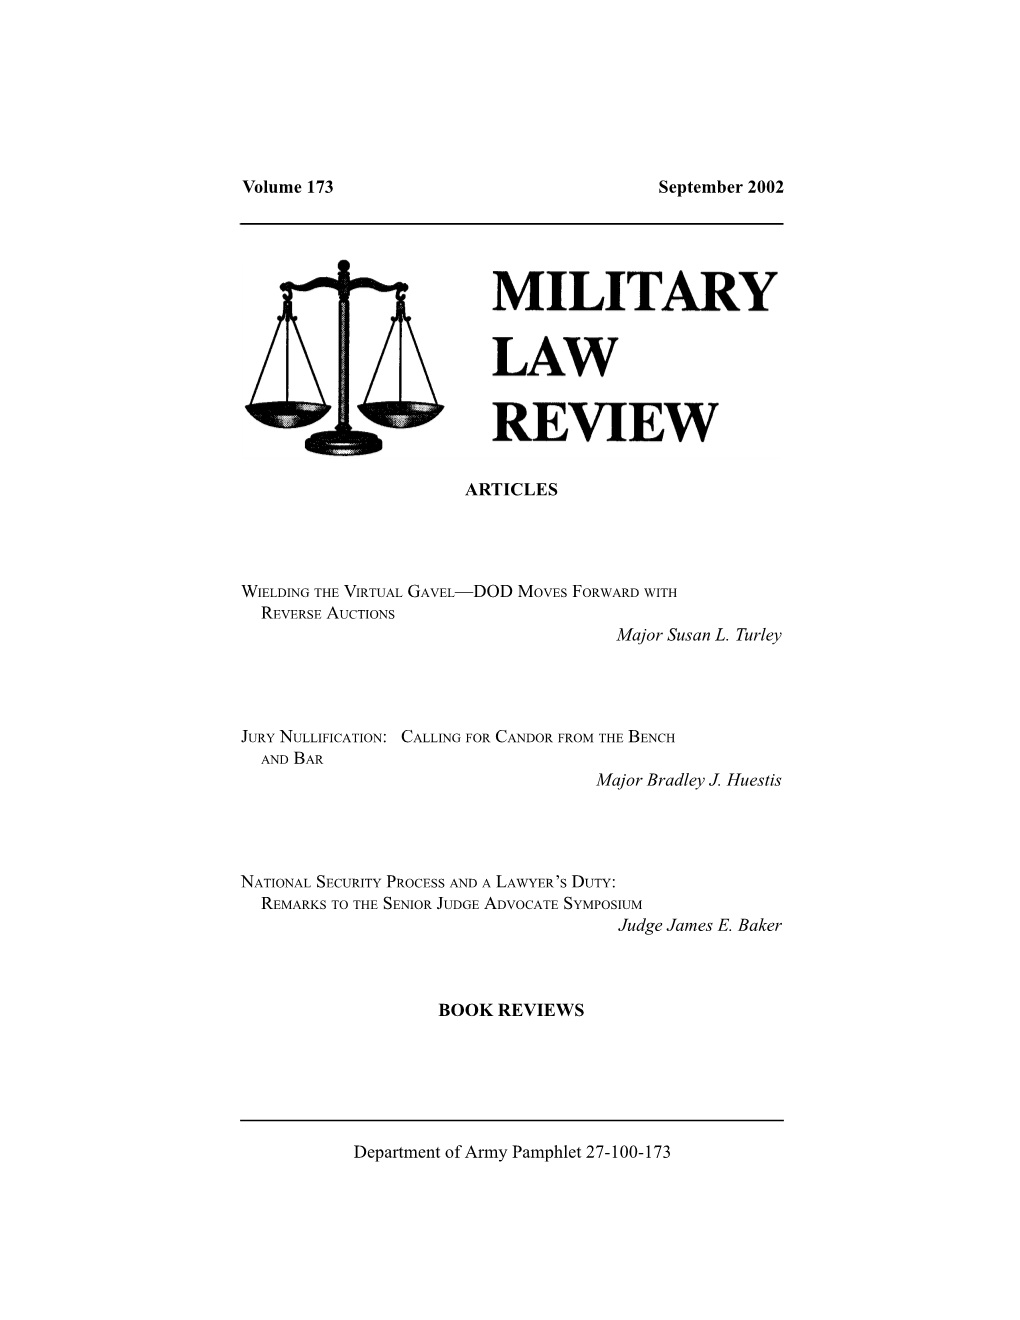 ARTICLES Major Susan L. Turley Major Bradley J. Huestis Judge